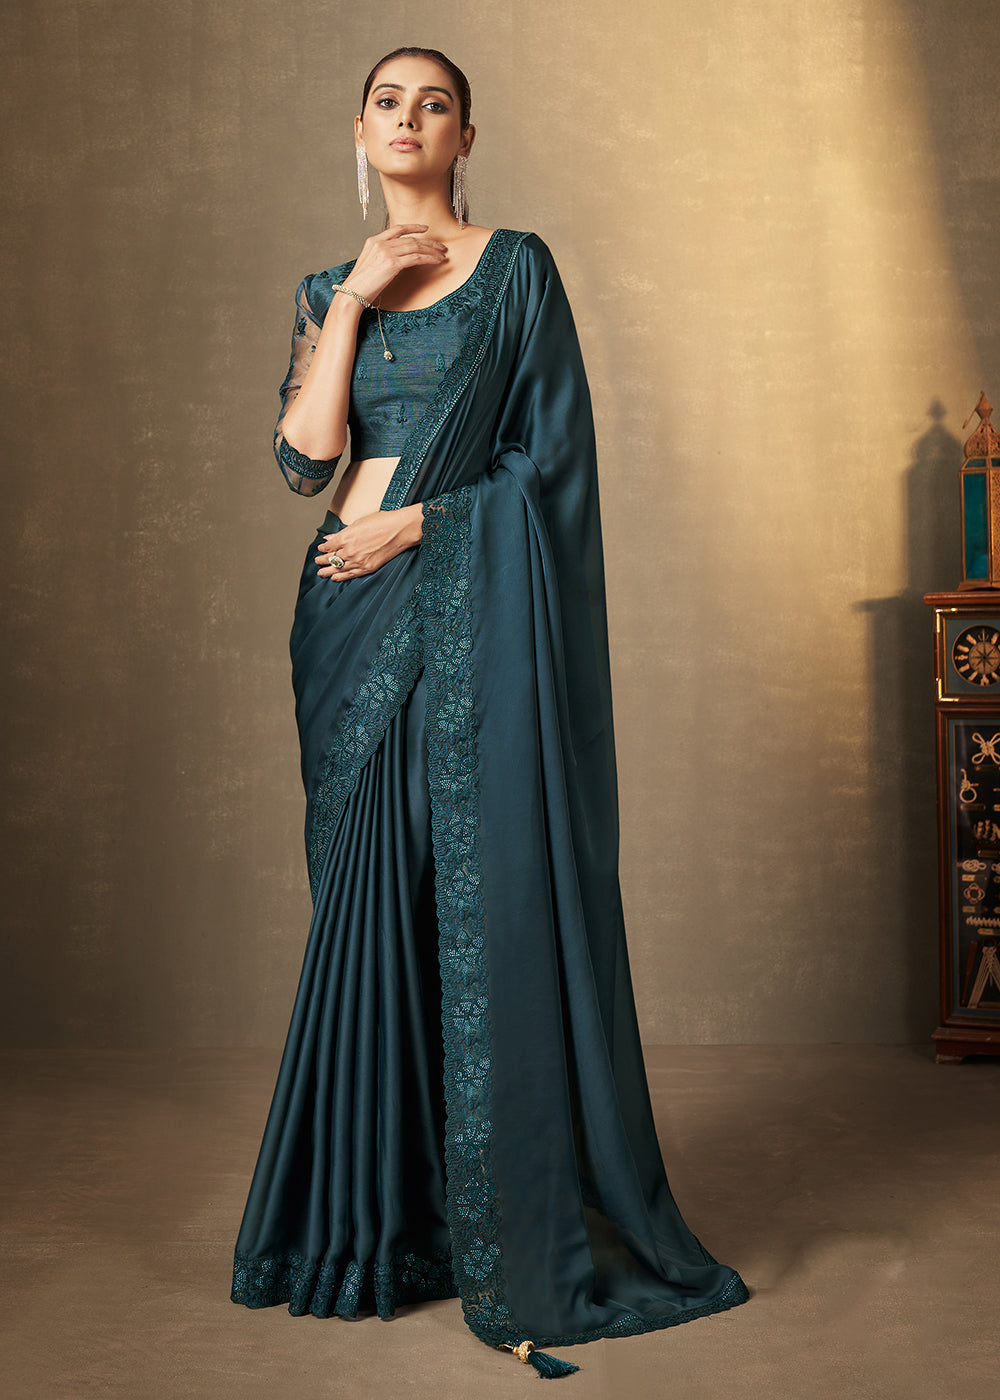 Buy Now Parisian Blue Satin Silk Swarovski Embroidered Designer Saree Online in USA, UK, Canada & Worldwide at Empress Clothing. 